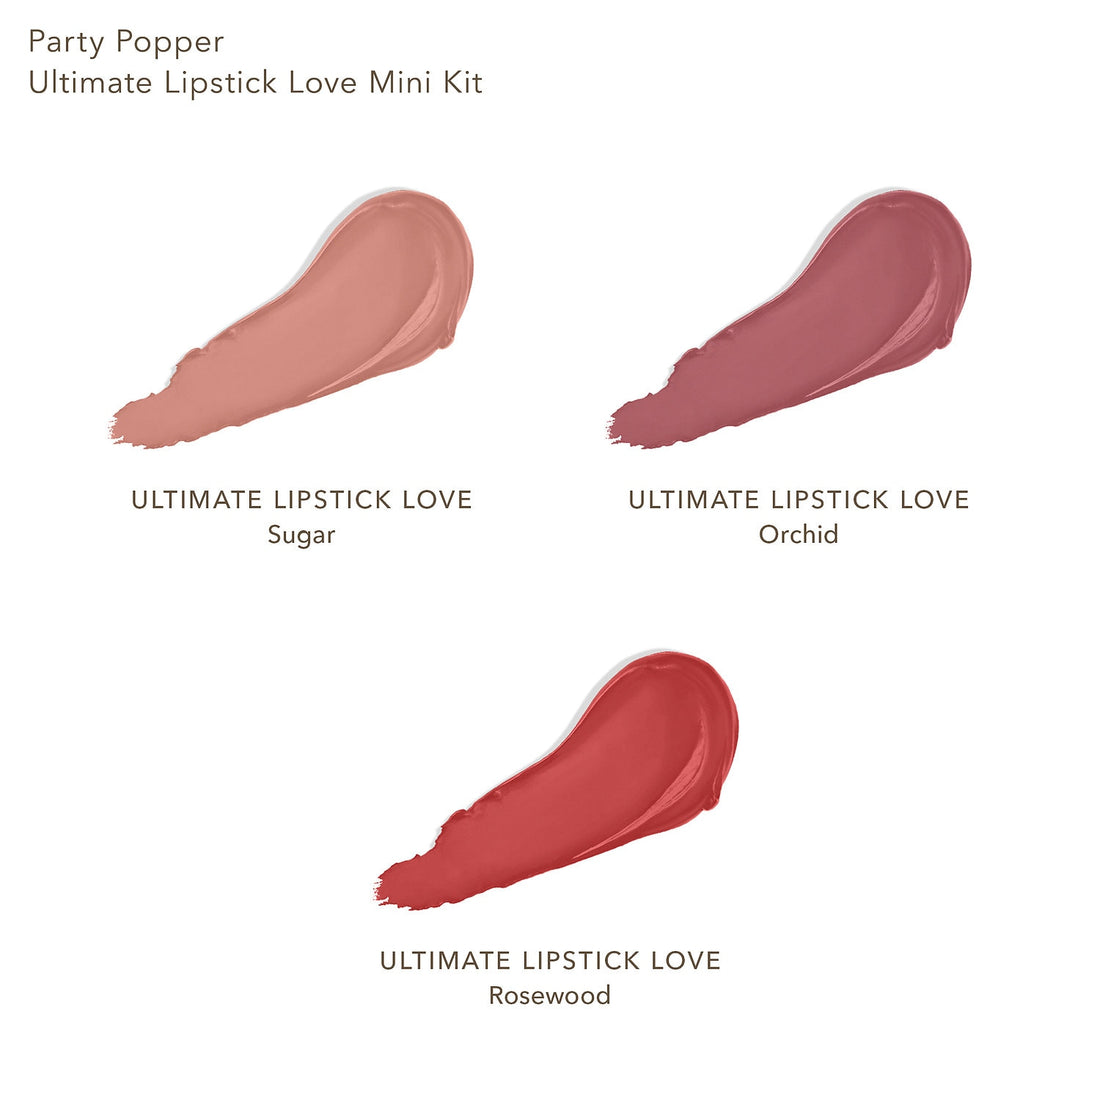 Party Popper Ultimate Lipstick Love Mini Kit